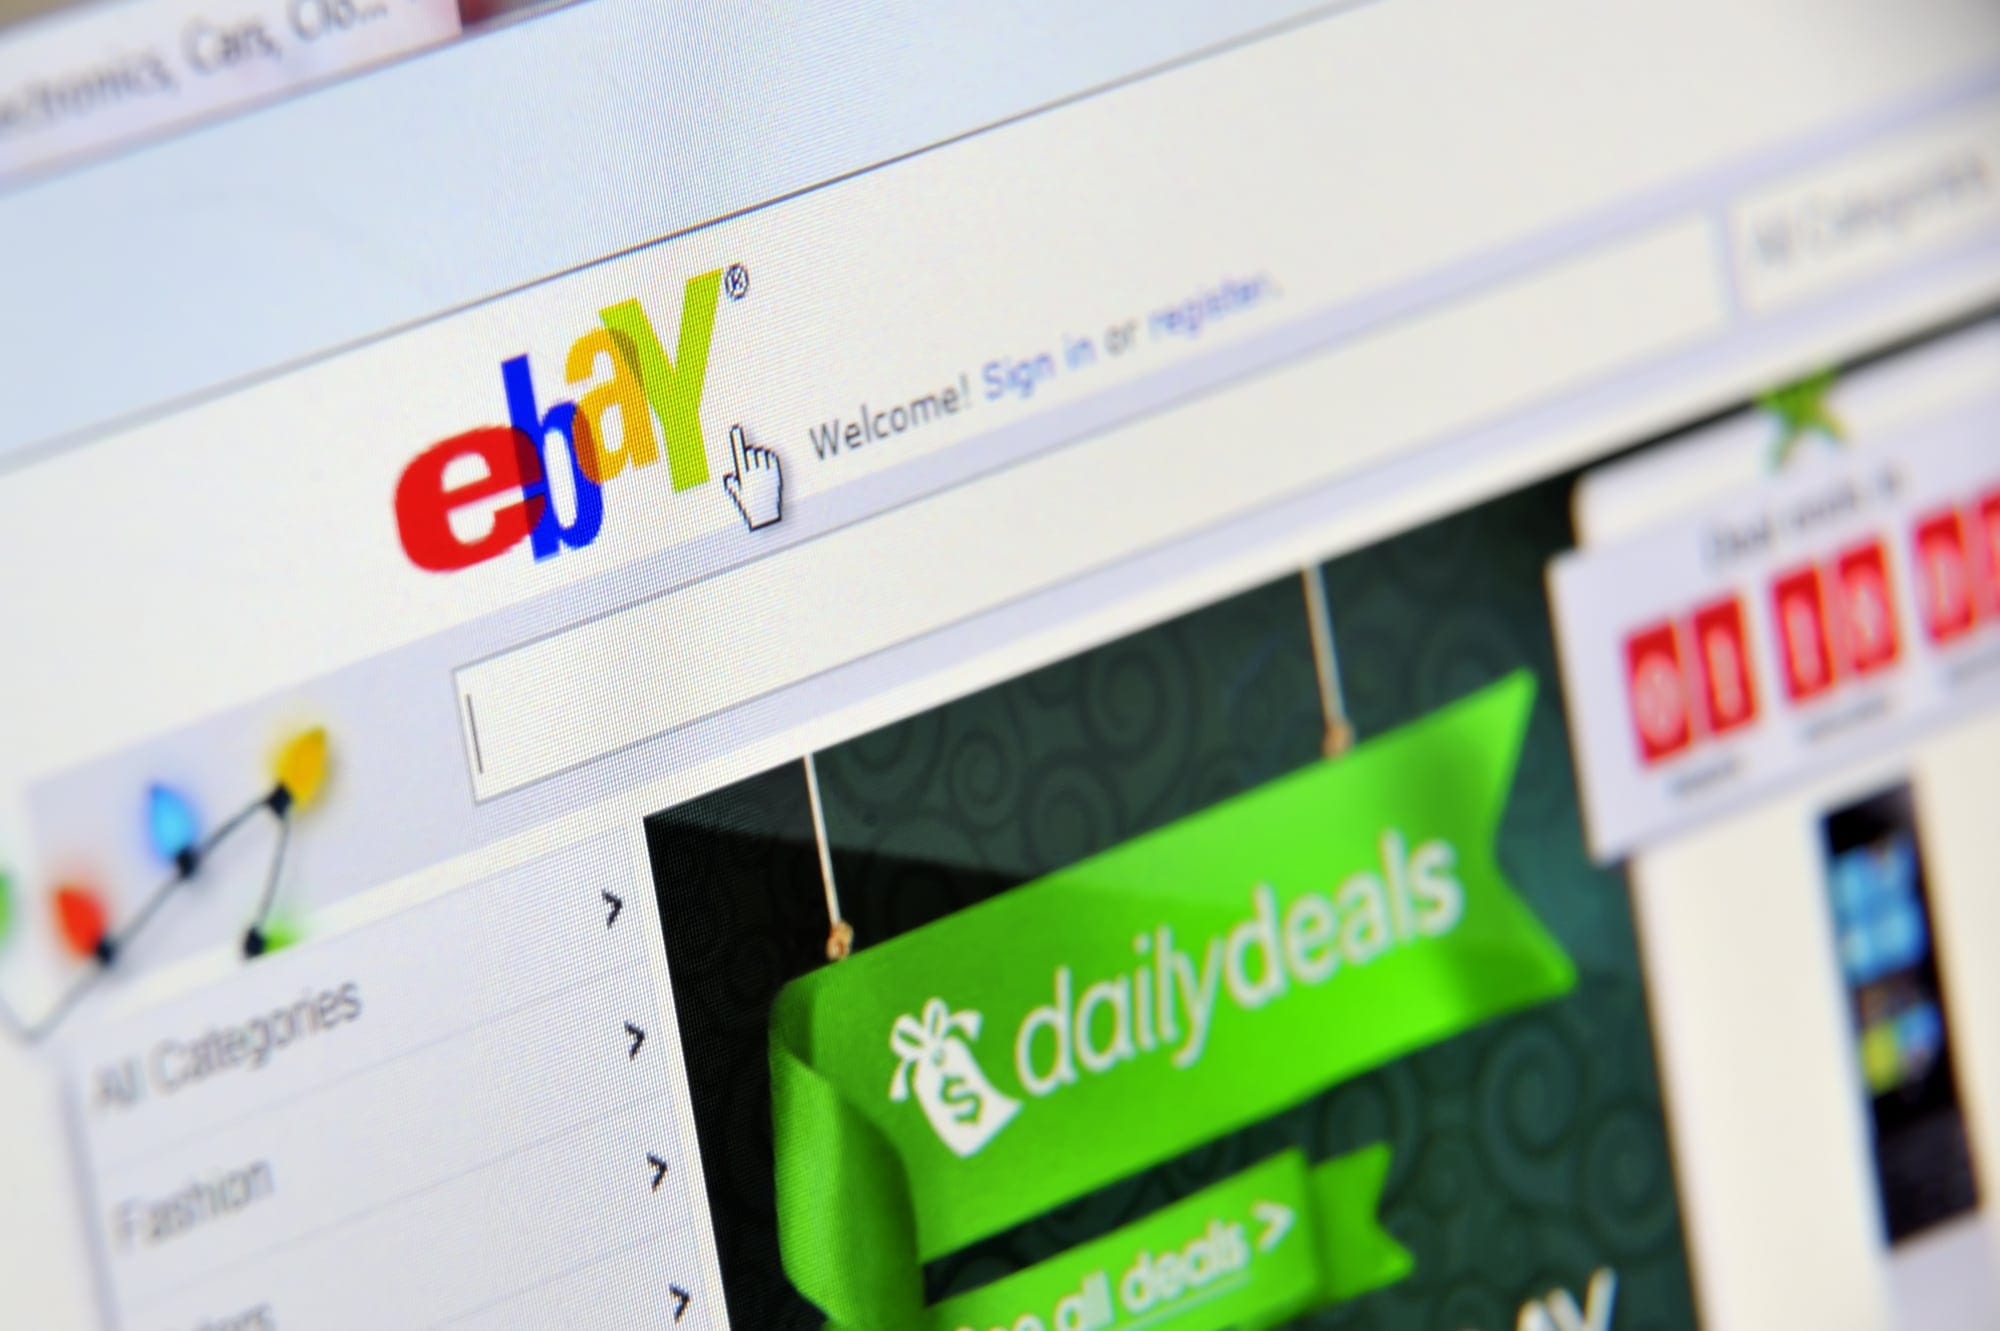 ebay-swot-analysis-strengths ebay page